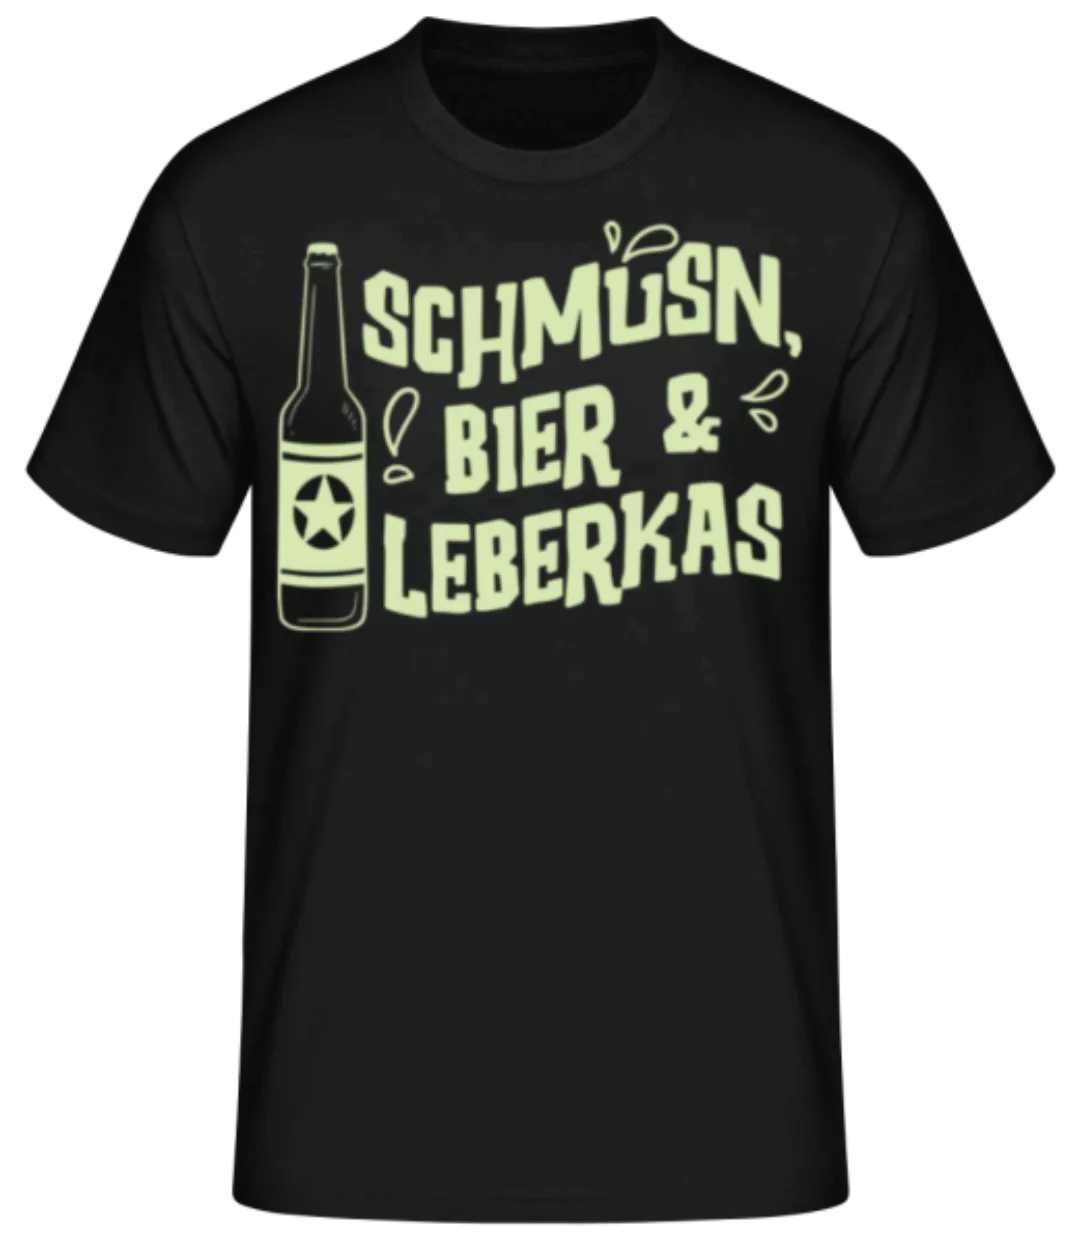 Schmusn Bier Leberkas · Männer Basic T-Shirt günstig online kaufen